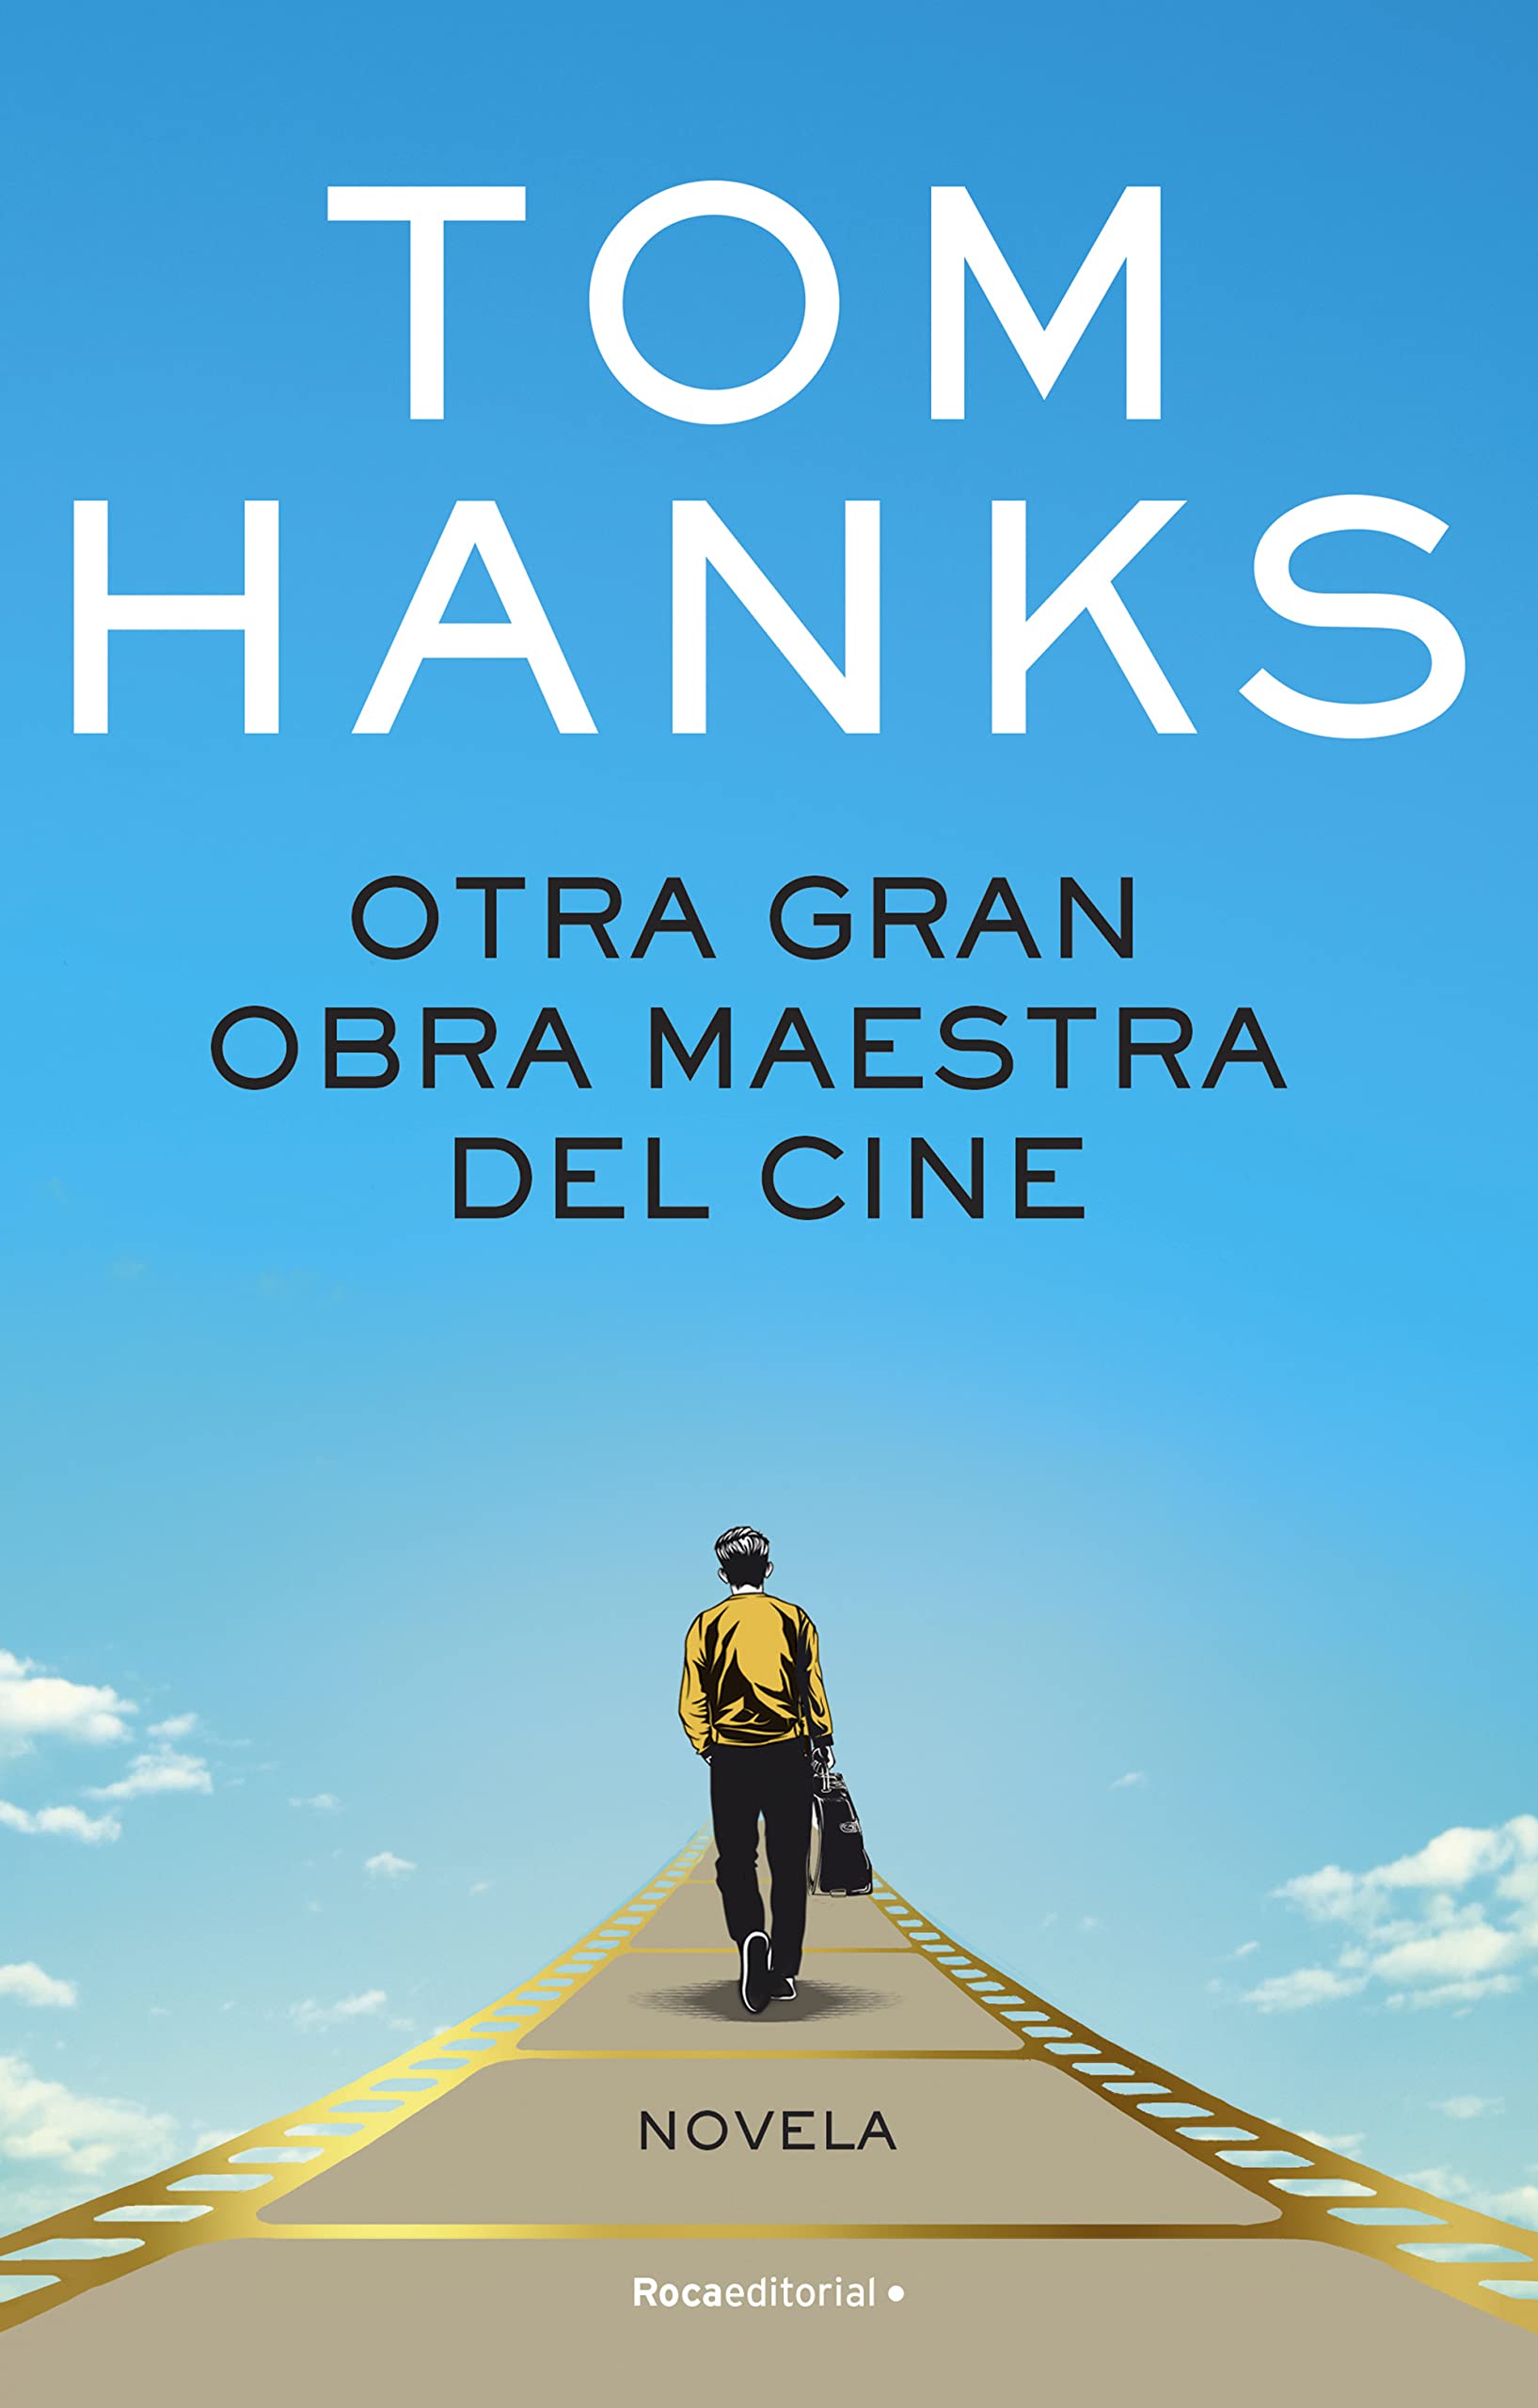 Tom Hanks debuta como novelista con 'Otra gran obra maestra del cine'